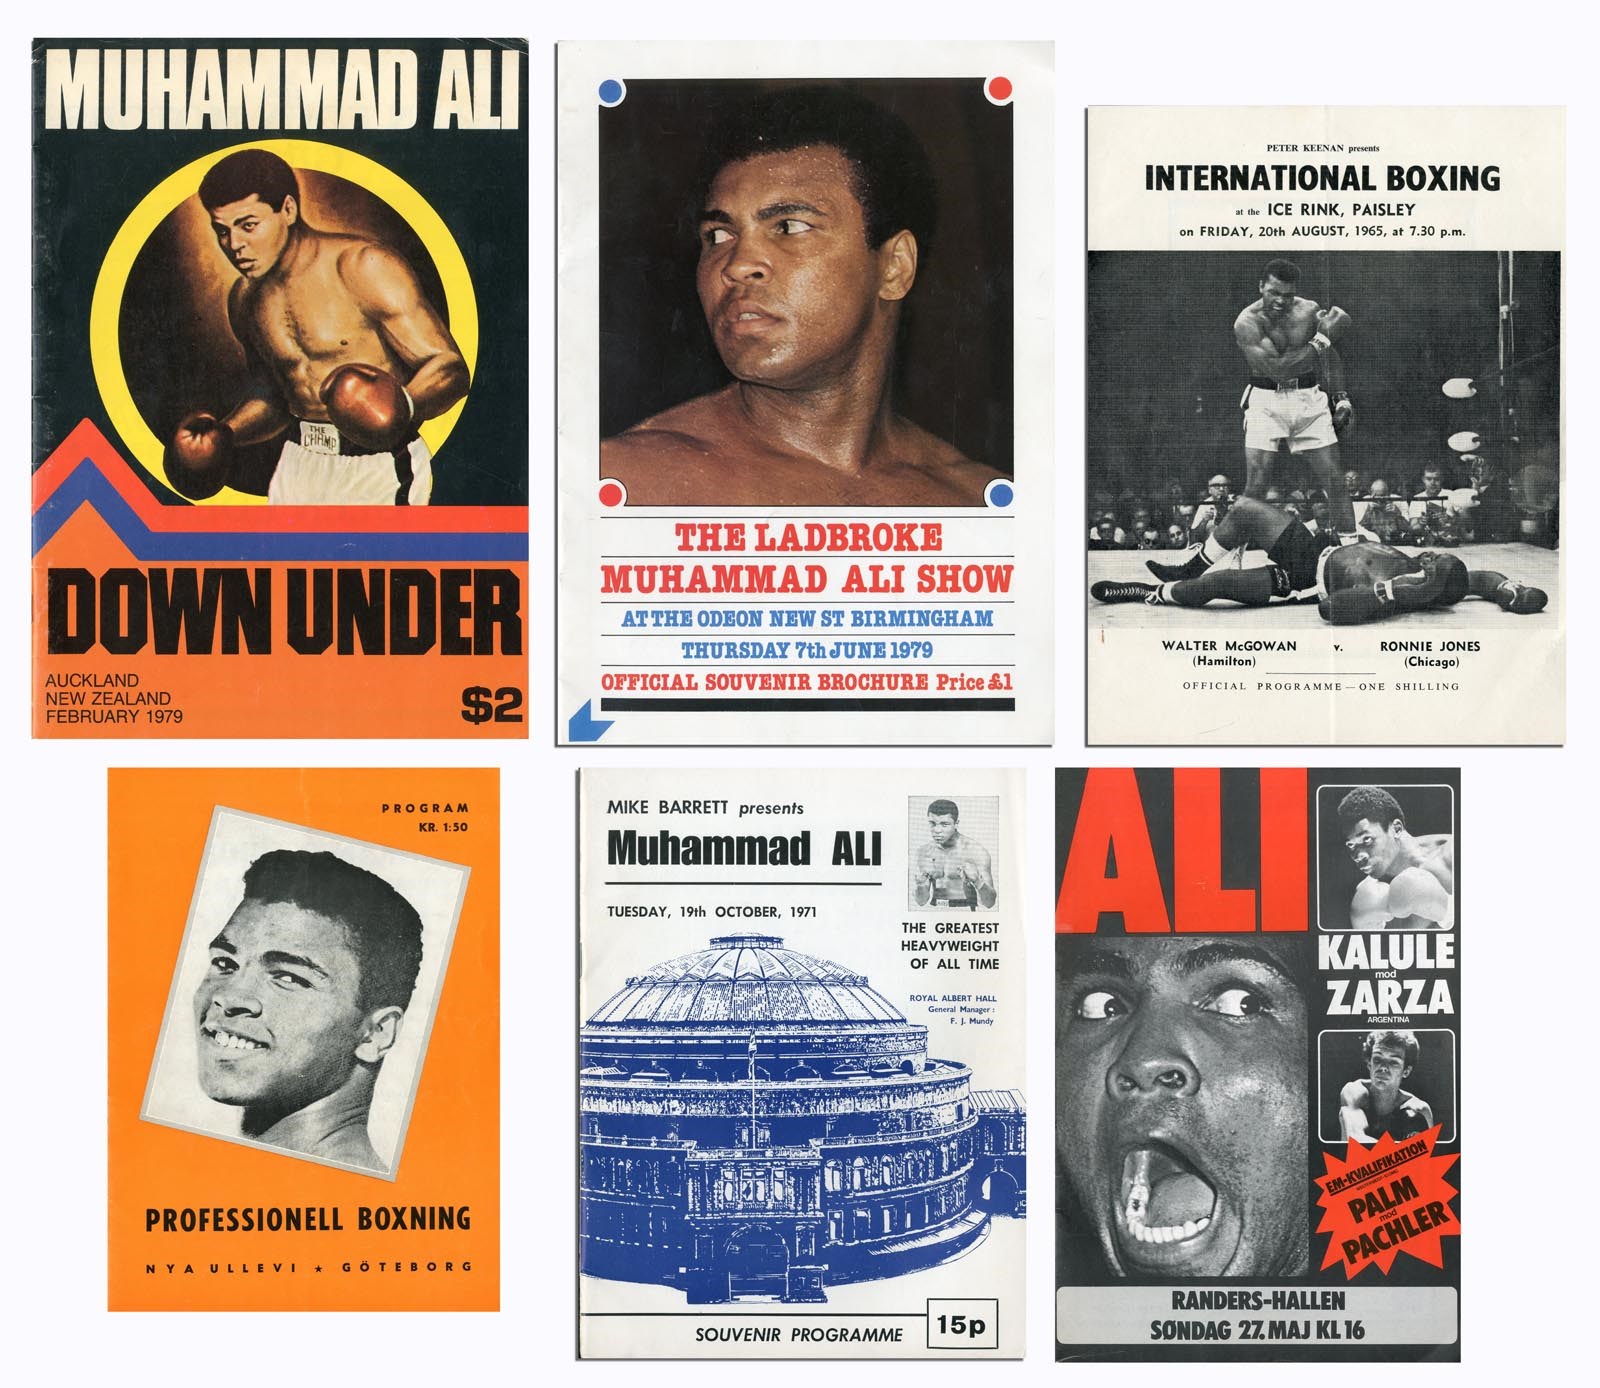 Muhammad Ali & Boxing - 1965-79 Cassius Clay & Muhammad Ali Exhibition Programs (6)